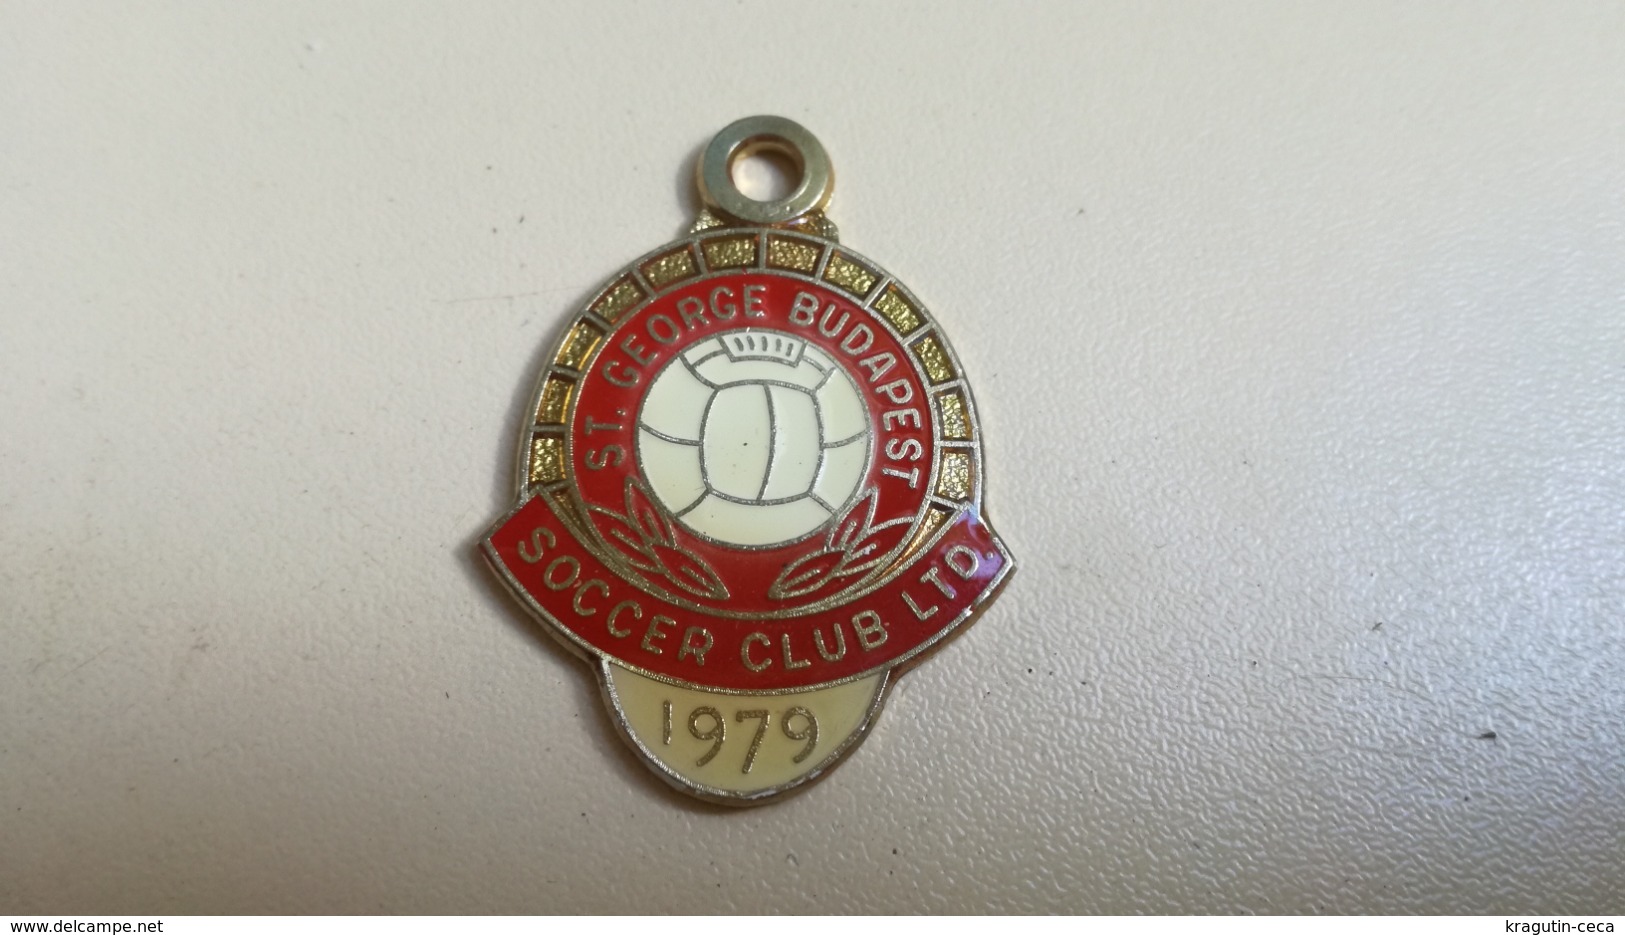 1979 St George BUDAPEST FOOTBALL SOCCER CLUB ltd MEMBER BADGE MEDAL pendant SYDNEY AUSTRALIA abzeichen Fußballverein